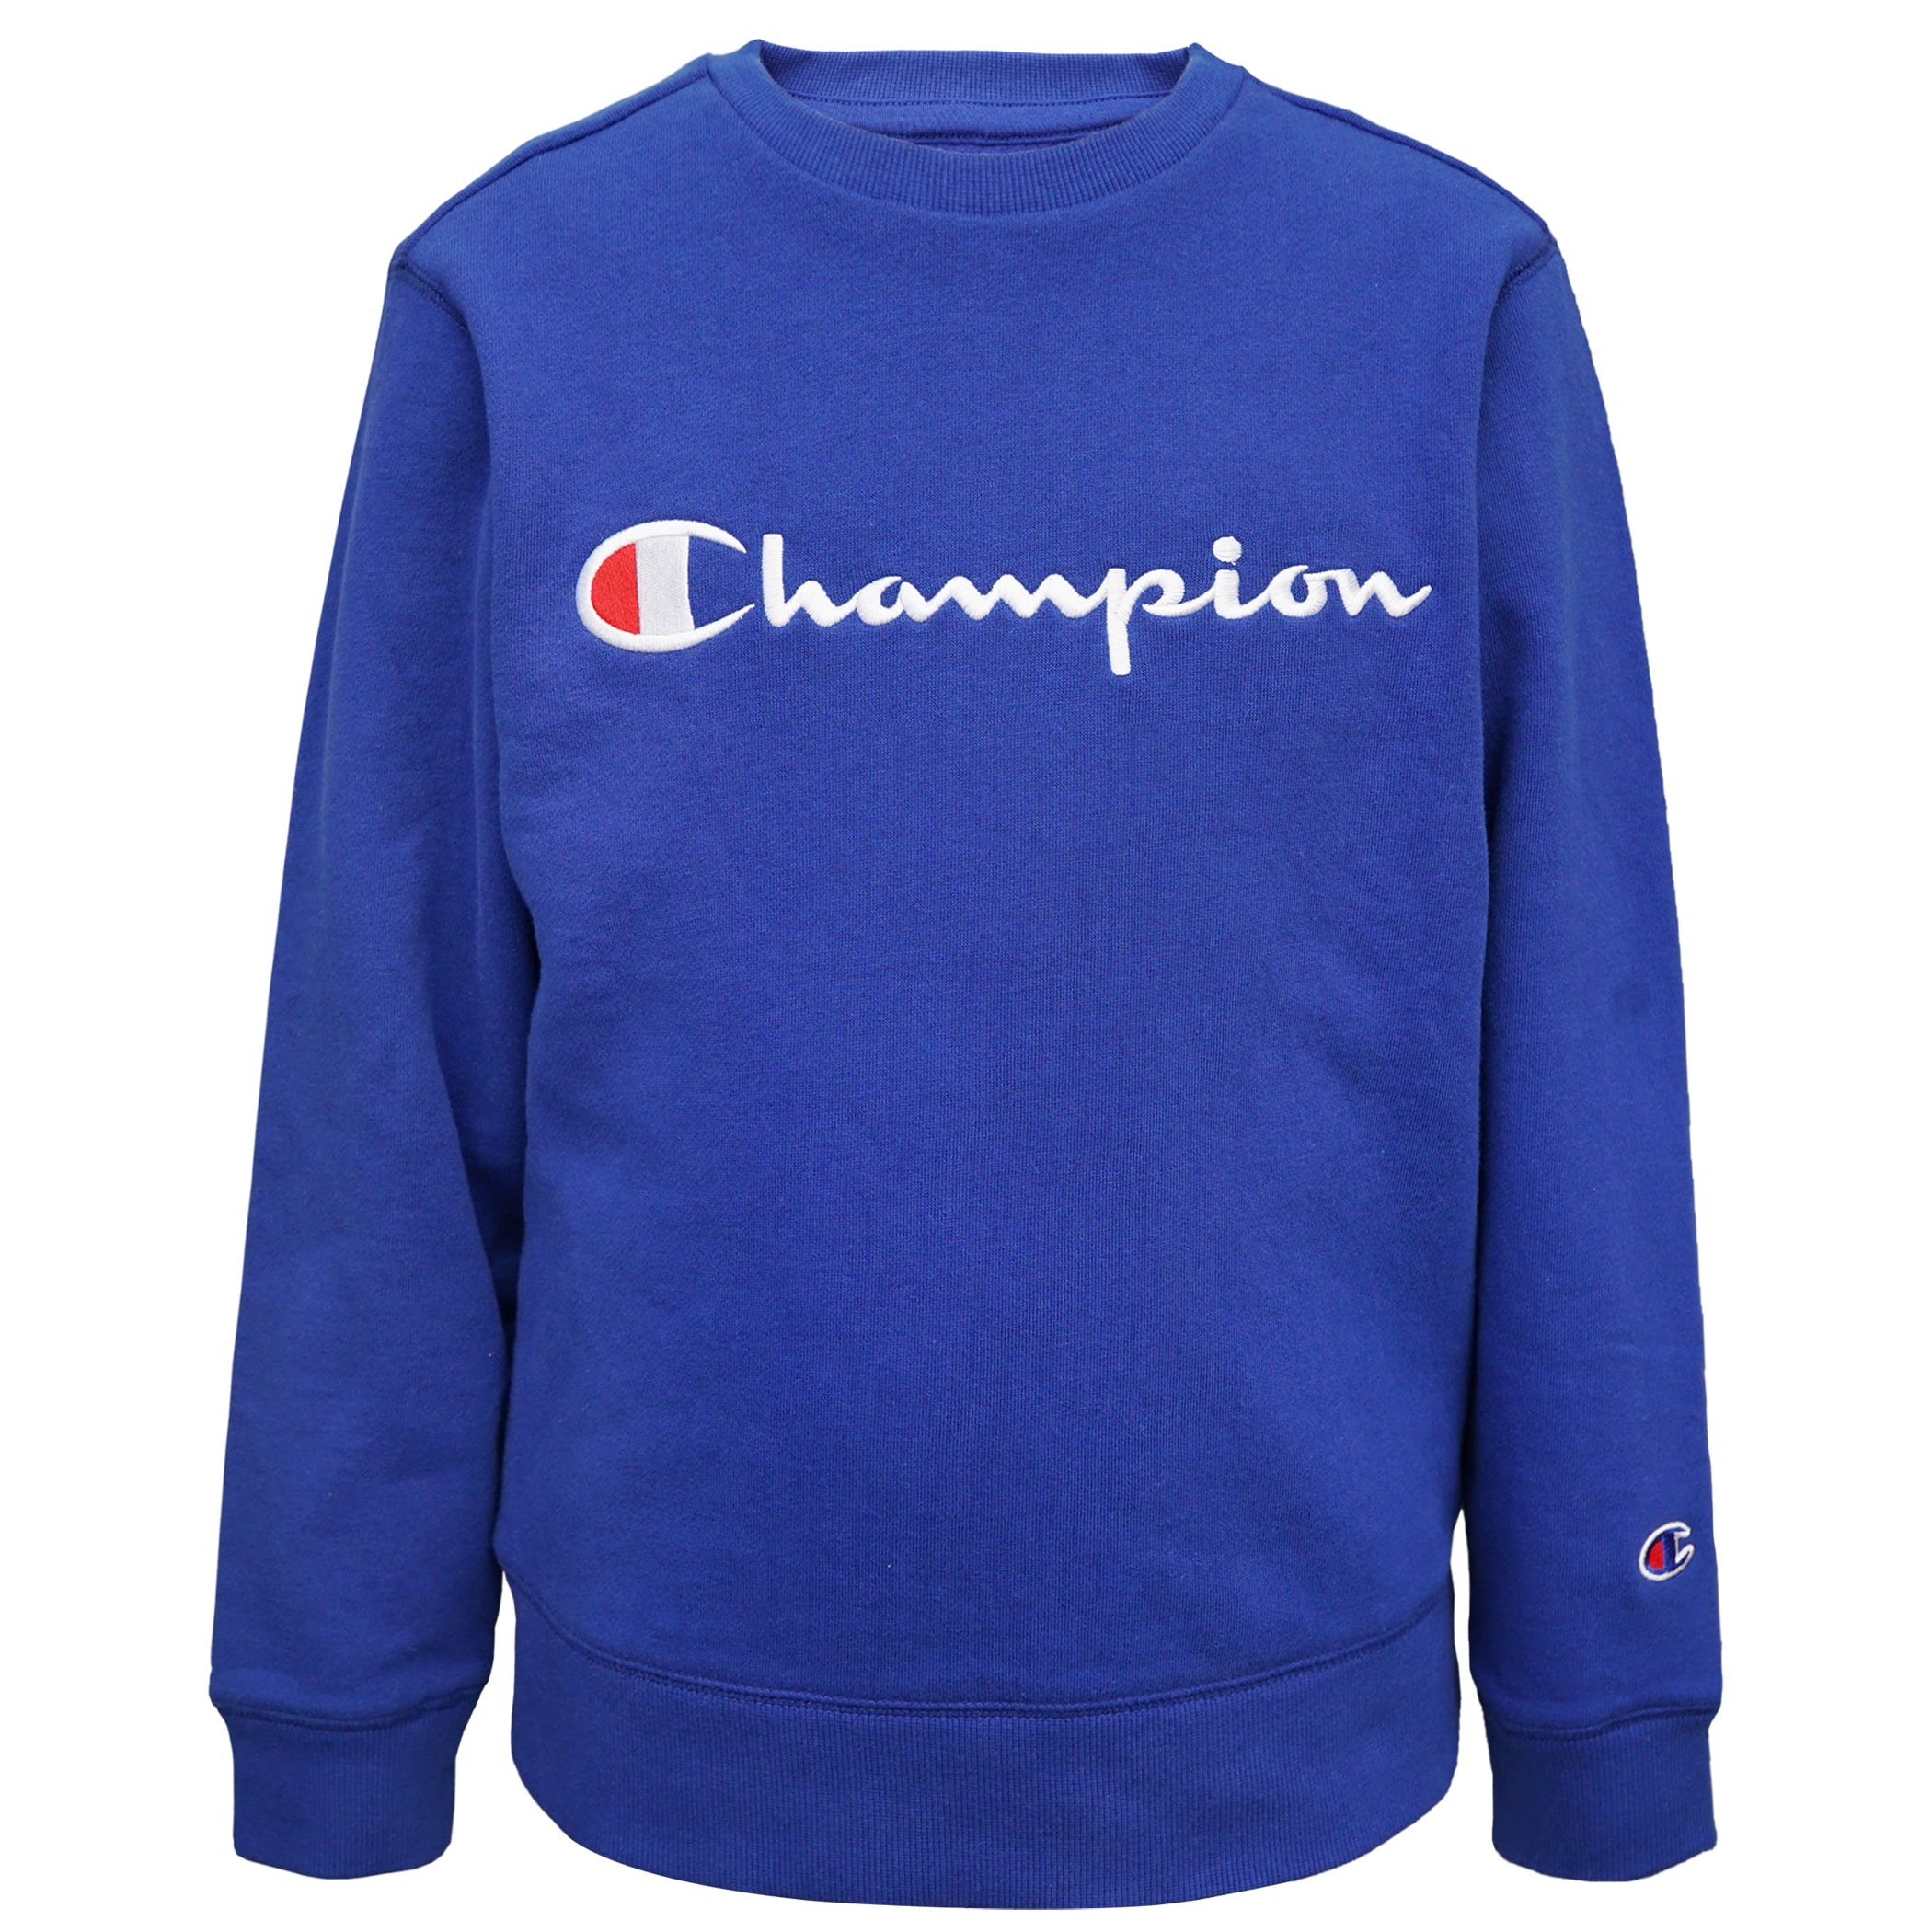 Champion Kids Clothing - Walmart.com